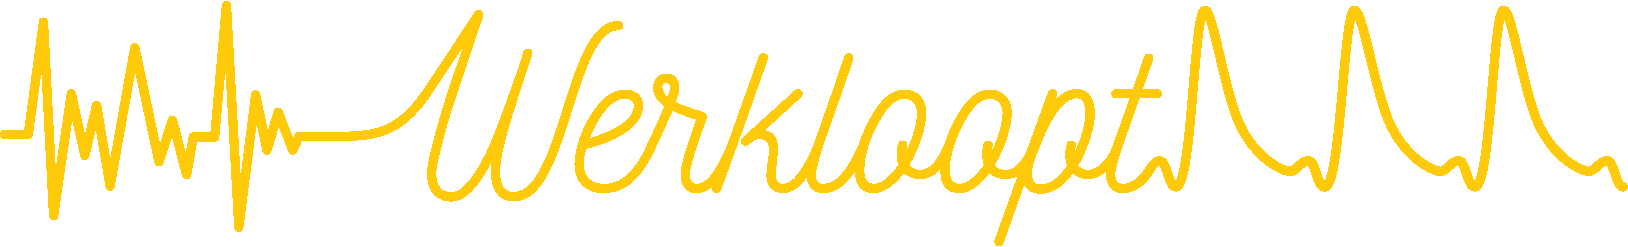 Werktloopt Logo